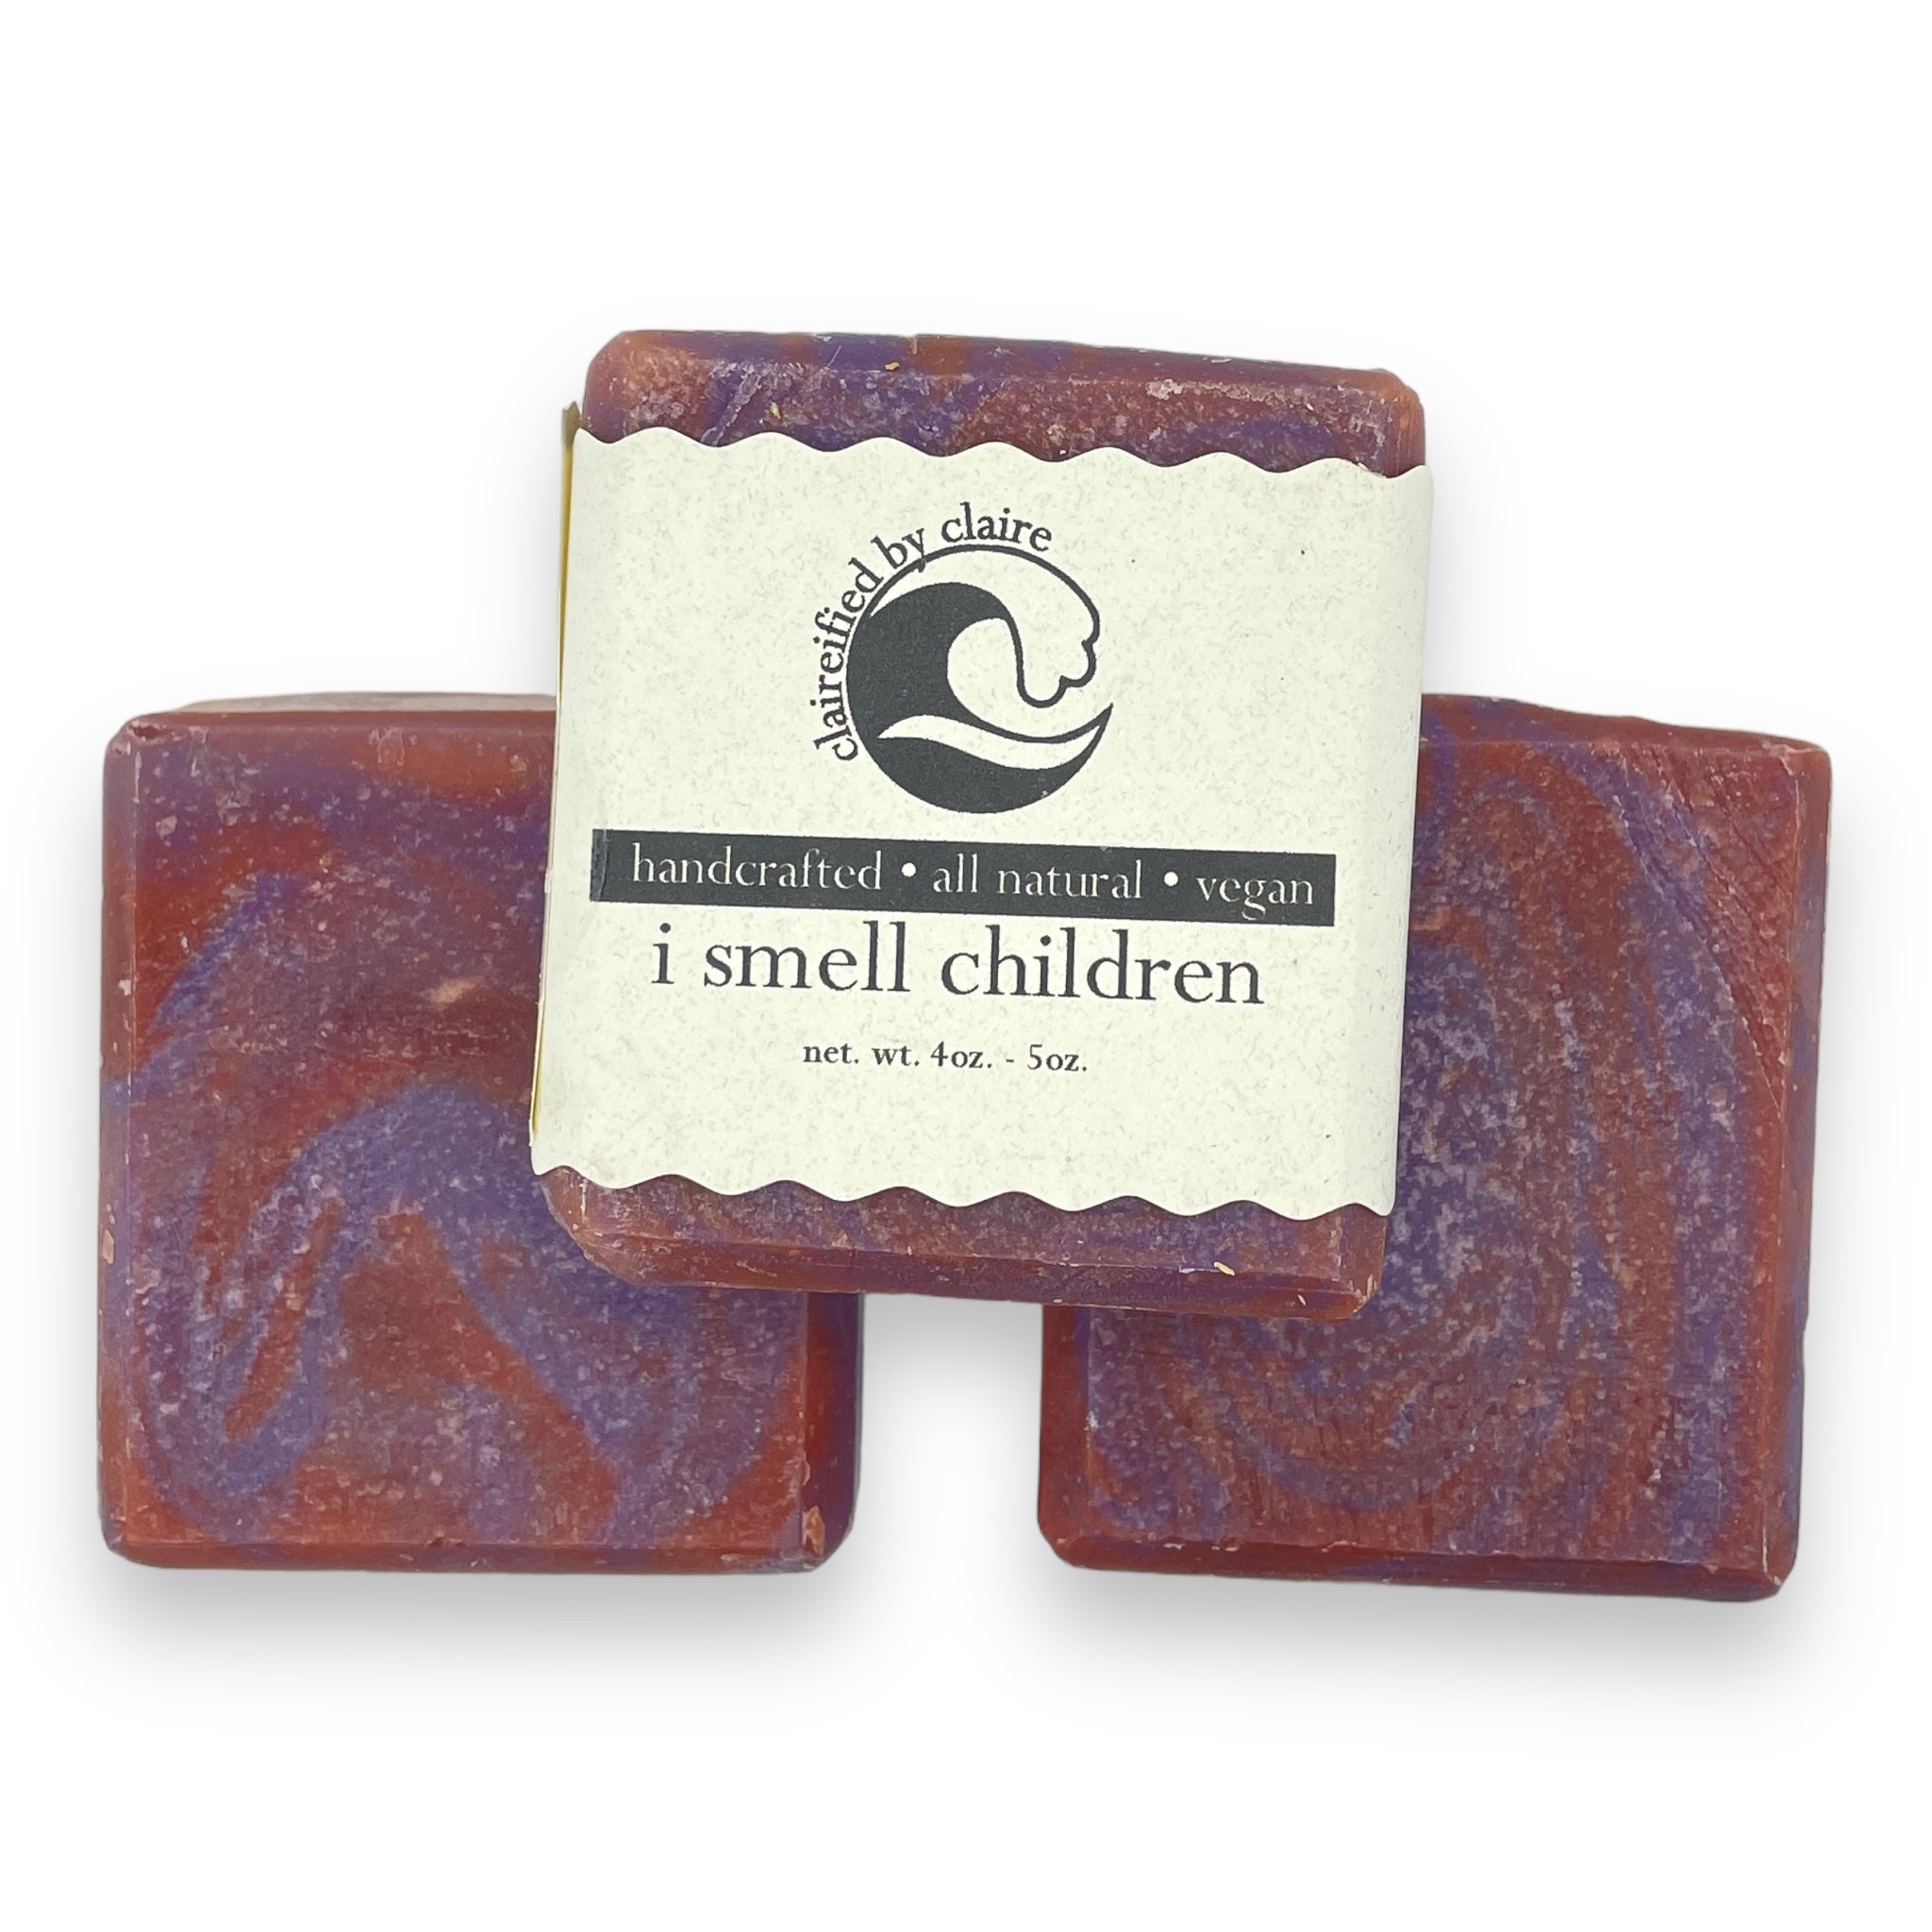 I Smell Children handmade soap inspired by Mary Sanderson - 0